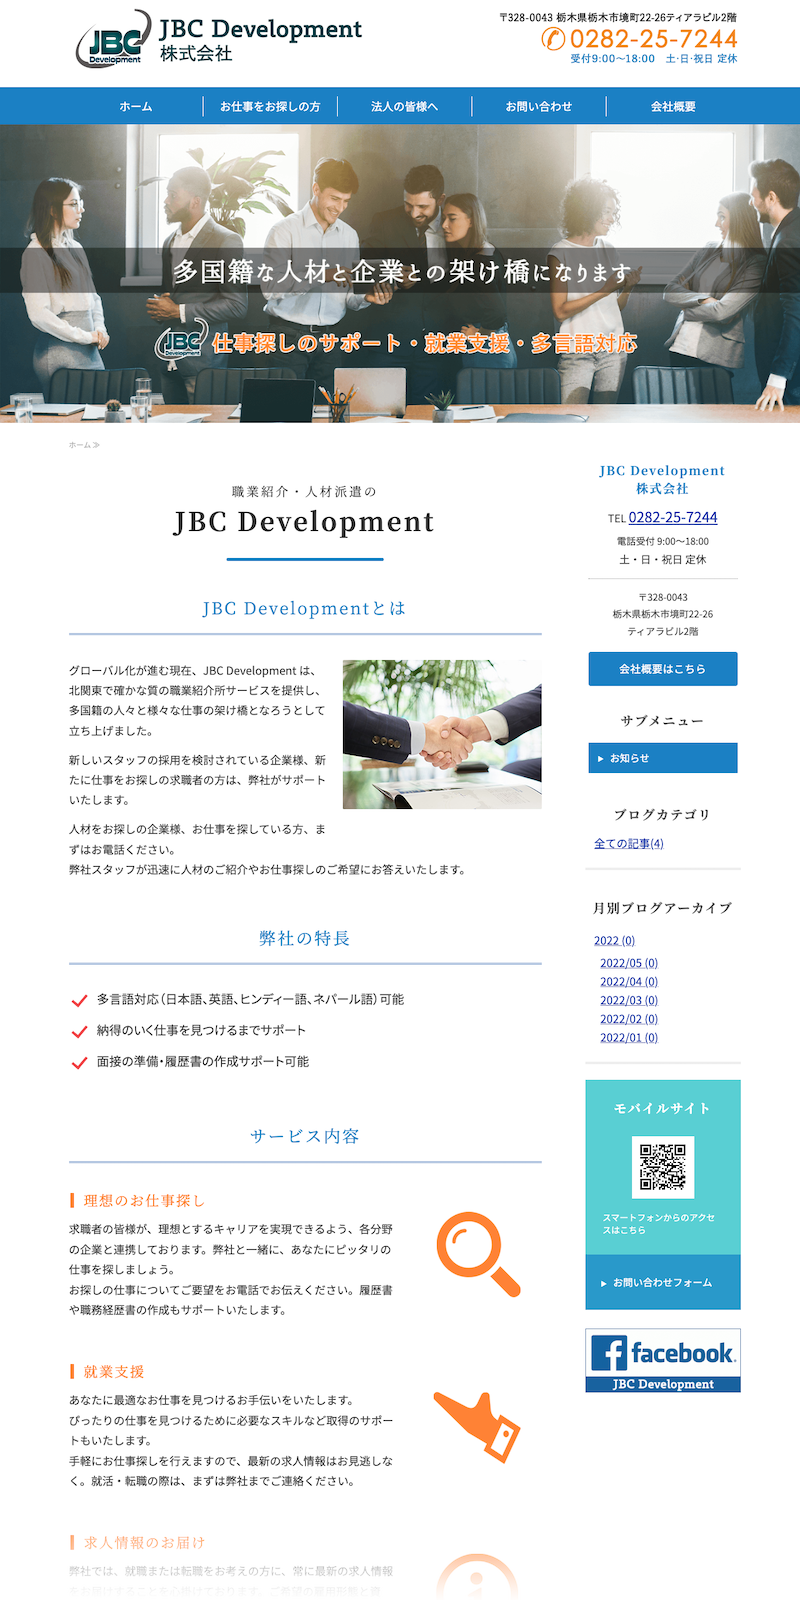 JBC Development株式会社